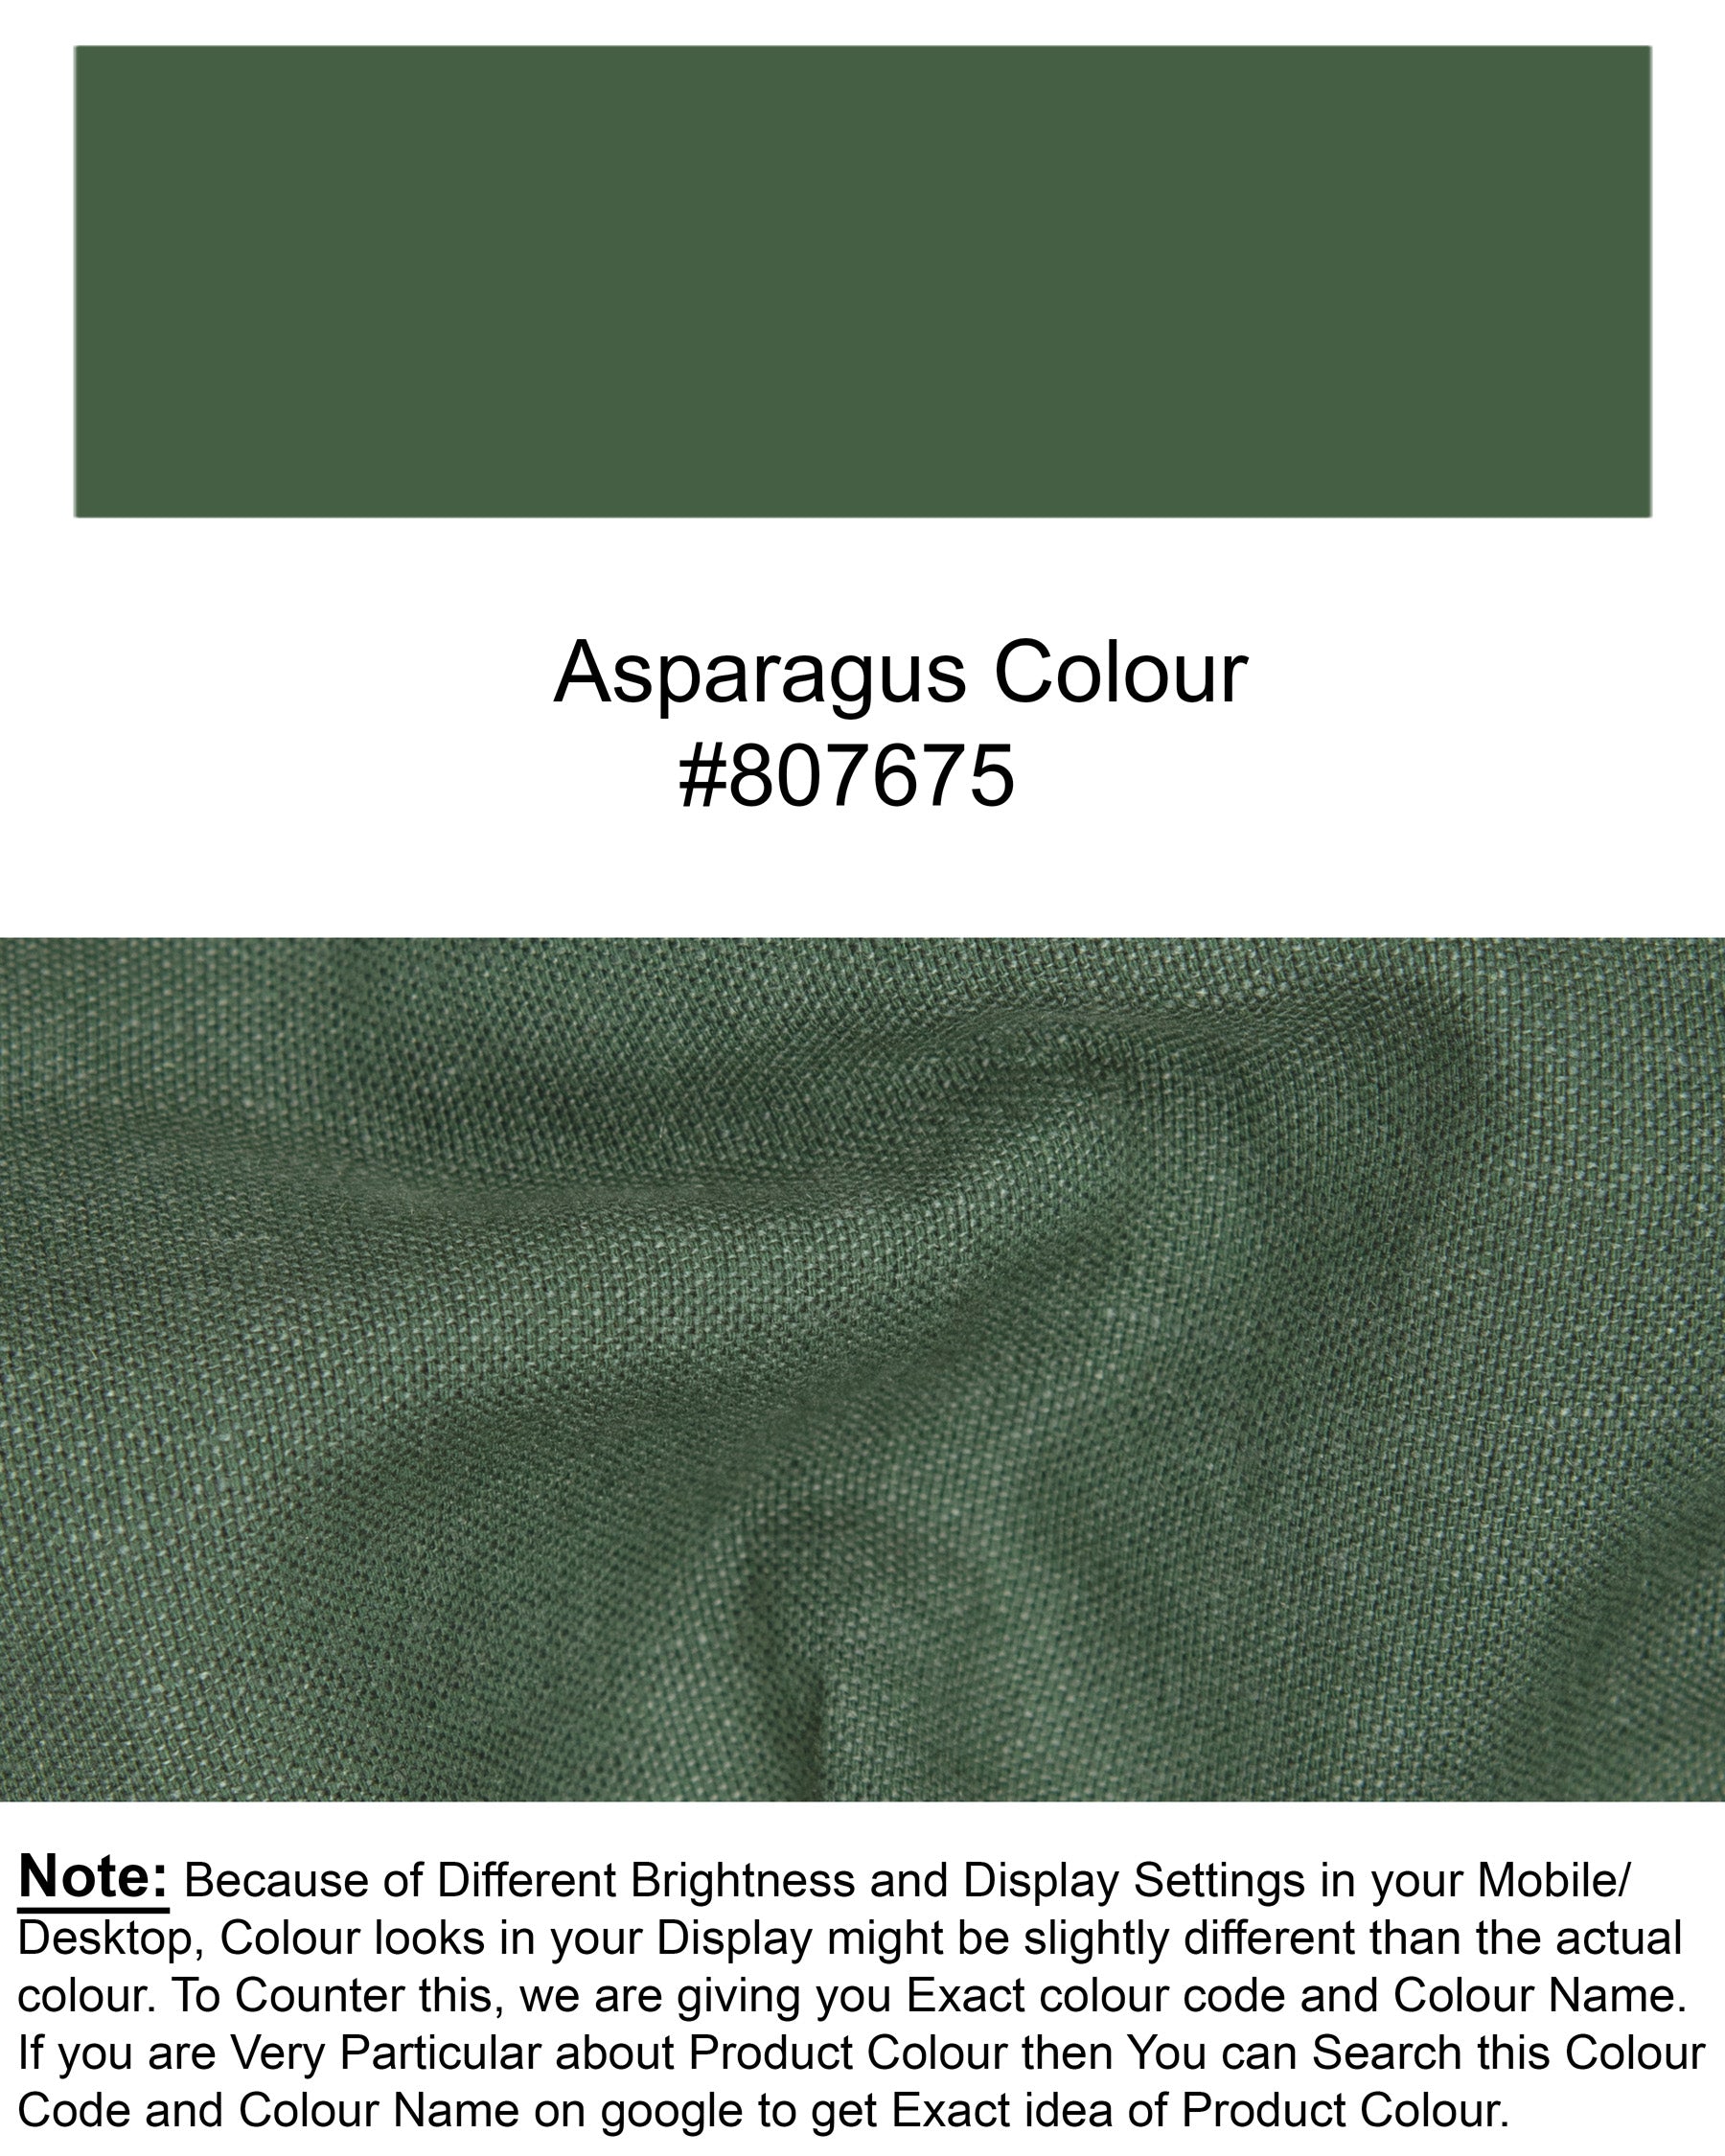 Asparagus Green Luxurious Linen Waistcoat V1276-36, V1276-38, V1276-40, V1276-42, V1276-44, V1276-46, V1276-48, V1276-50, V1276-52, V1276-54, V1276-56, V1276-58, V1276-60